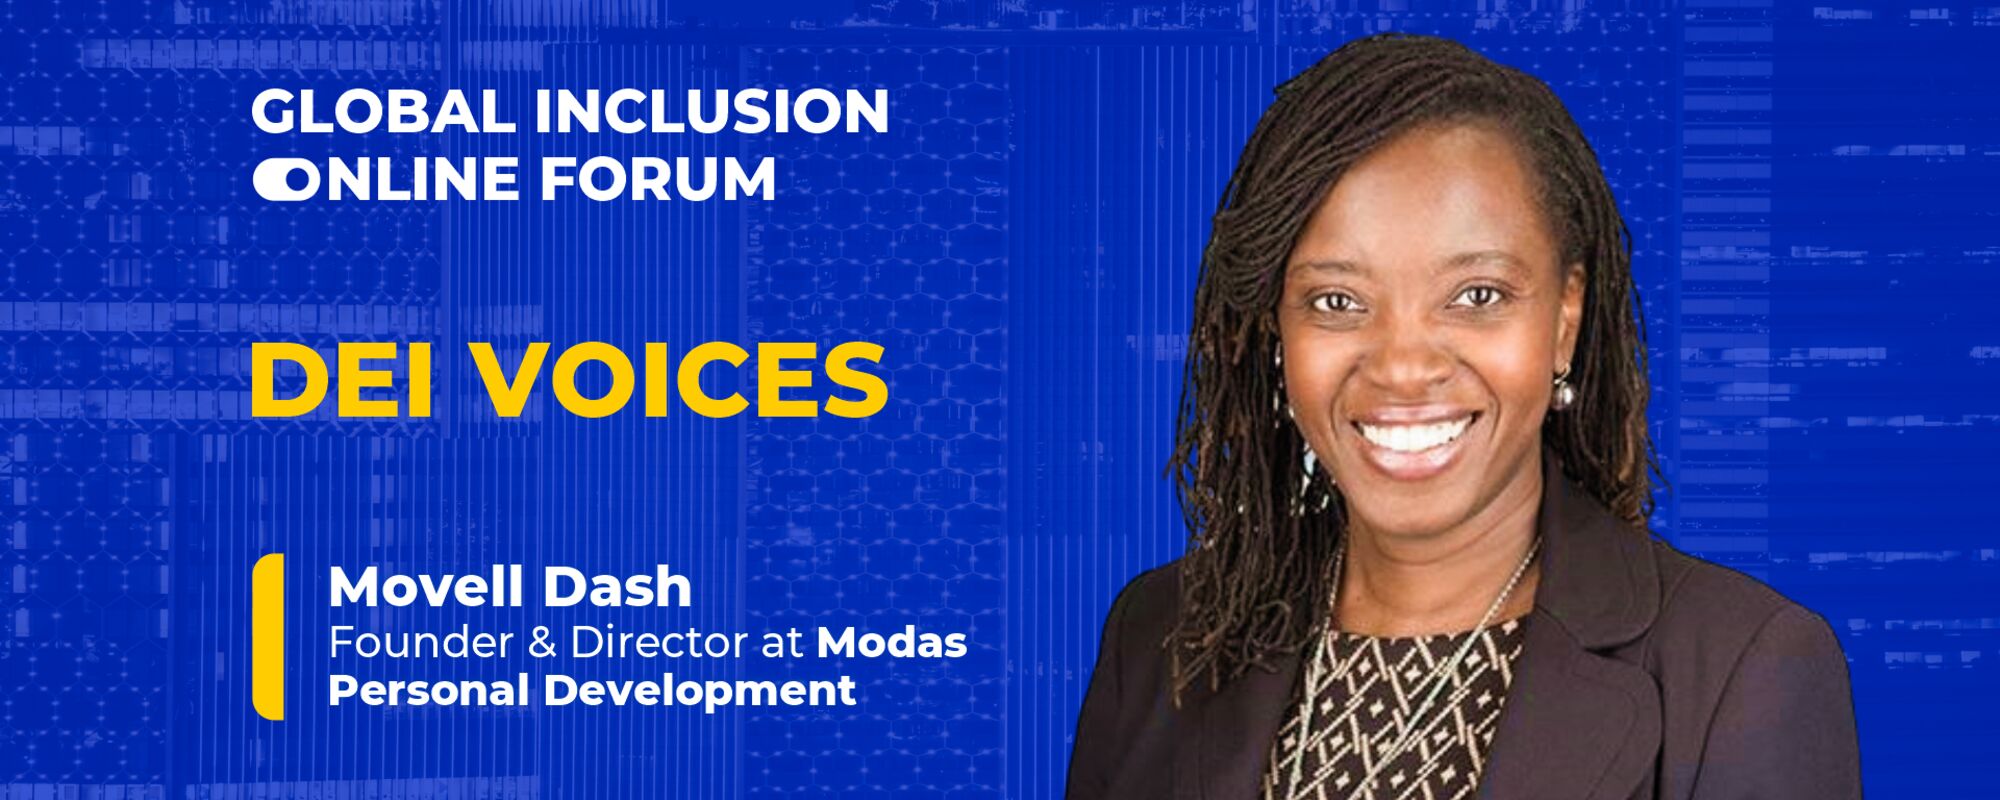 DEI Voices: Movell Dash - Founder & Director at Modas Personal Development